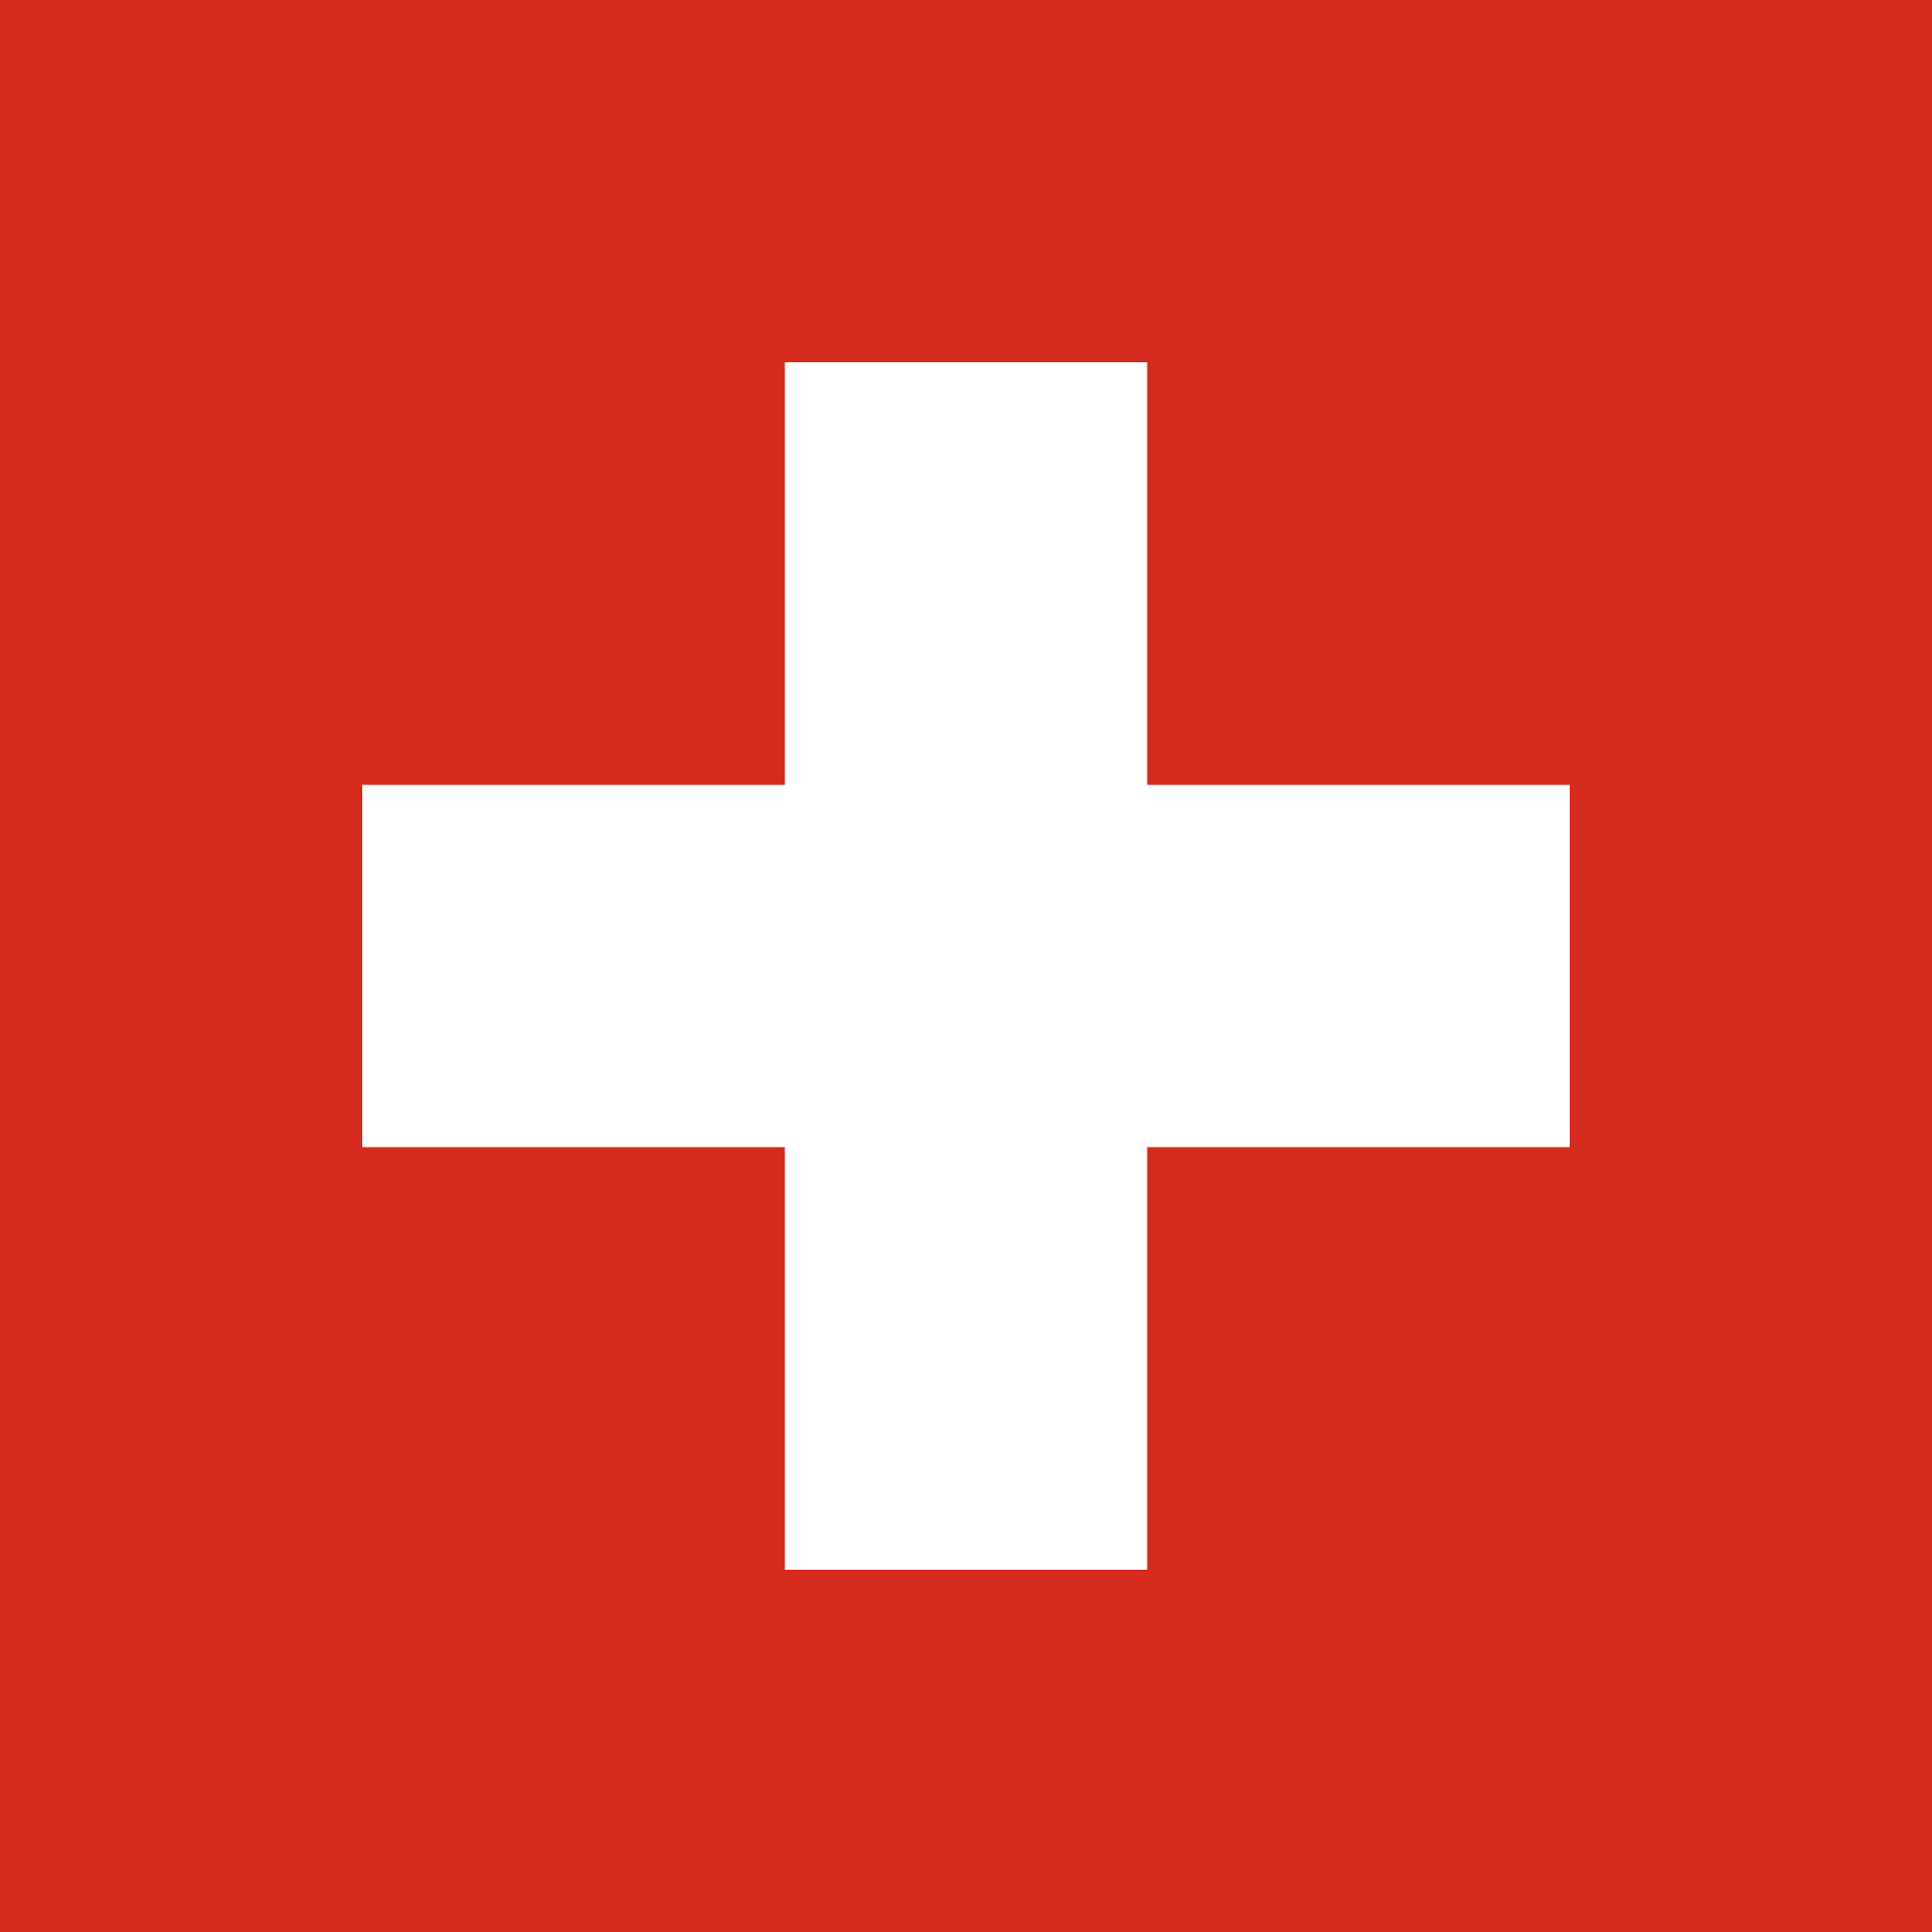 Svizzera: arriva il "Sì" alla Stepchild Adoption - svizzera bandiera - Gay.it